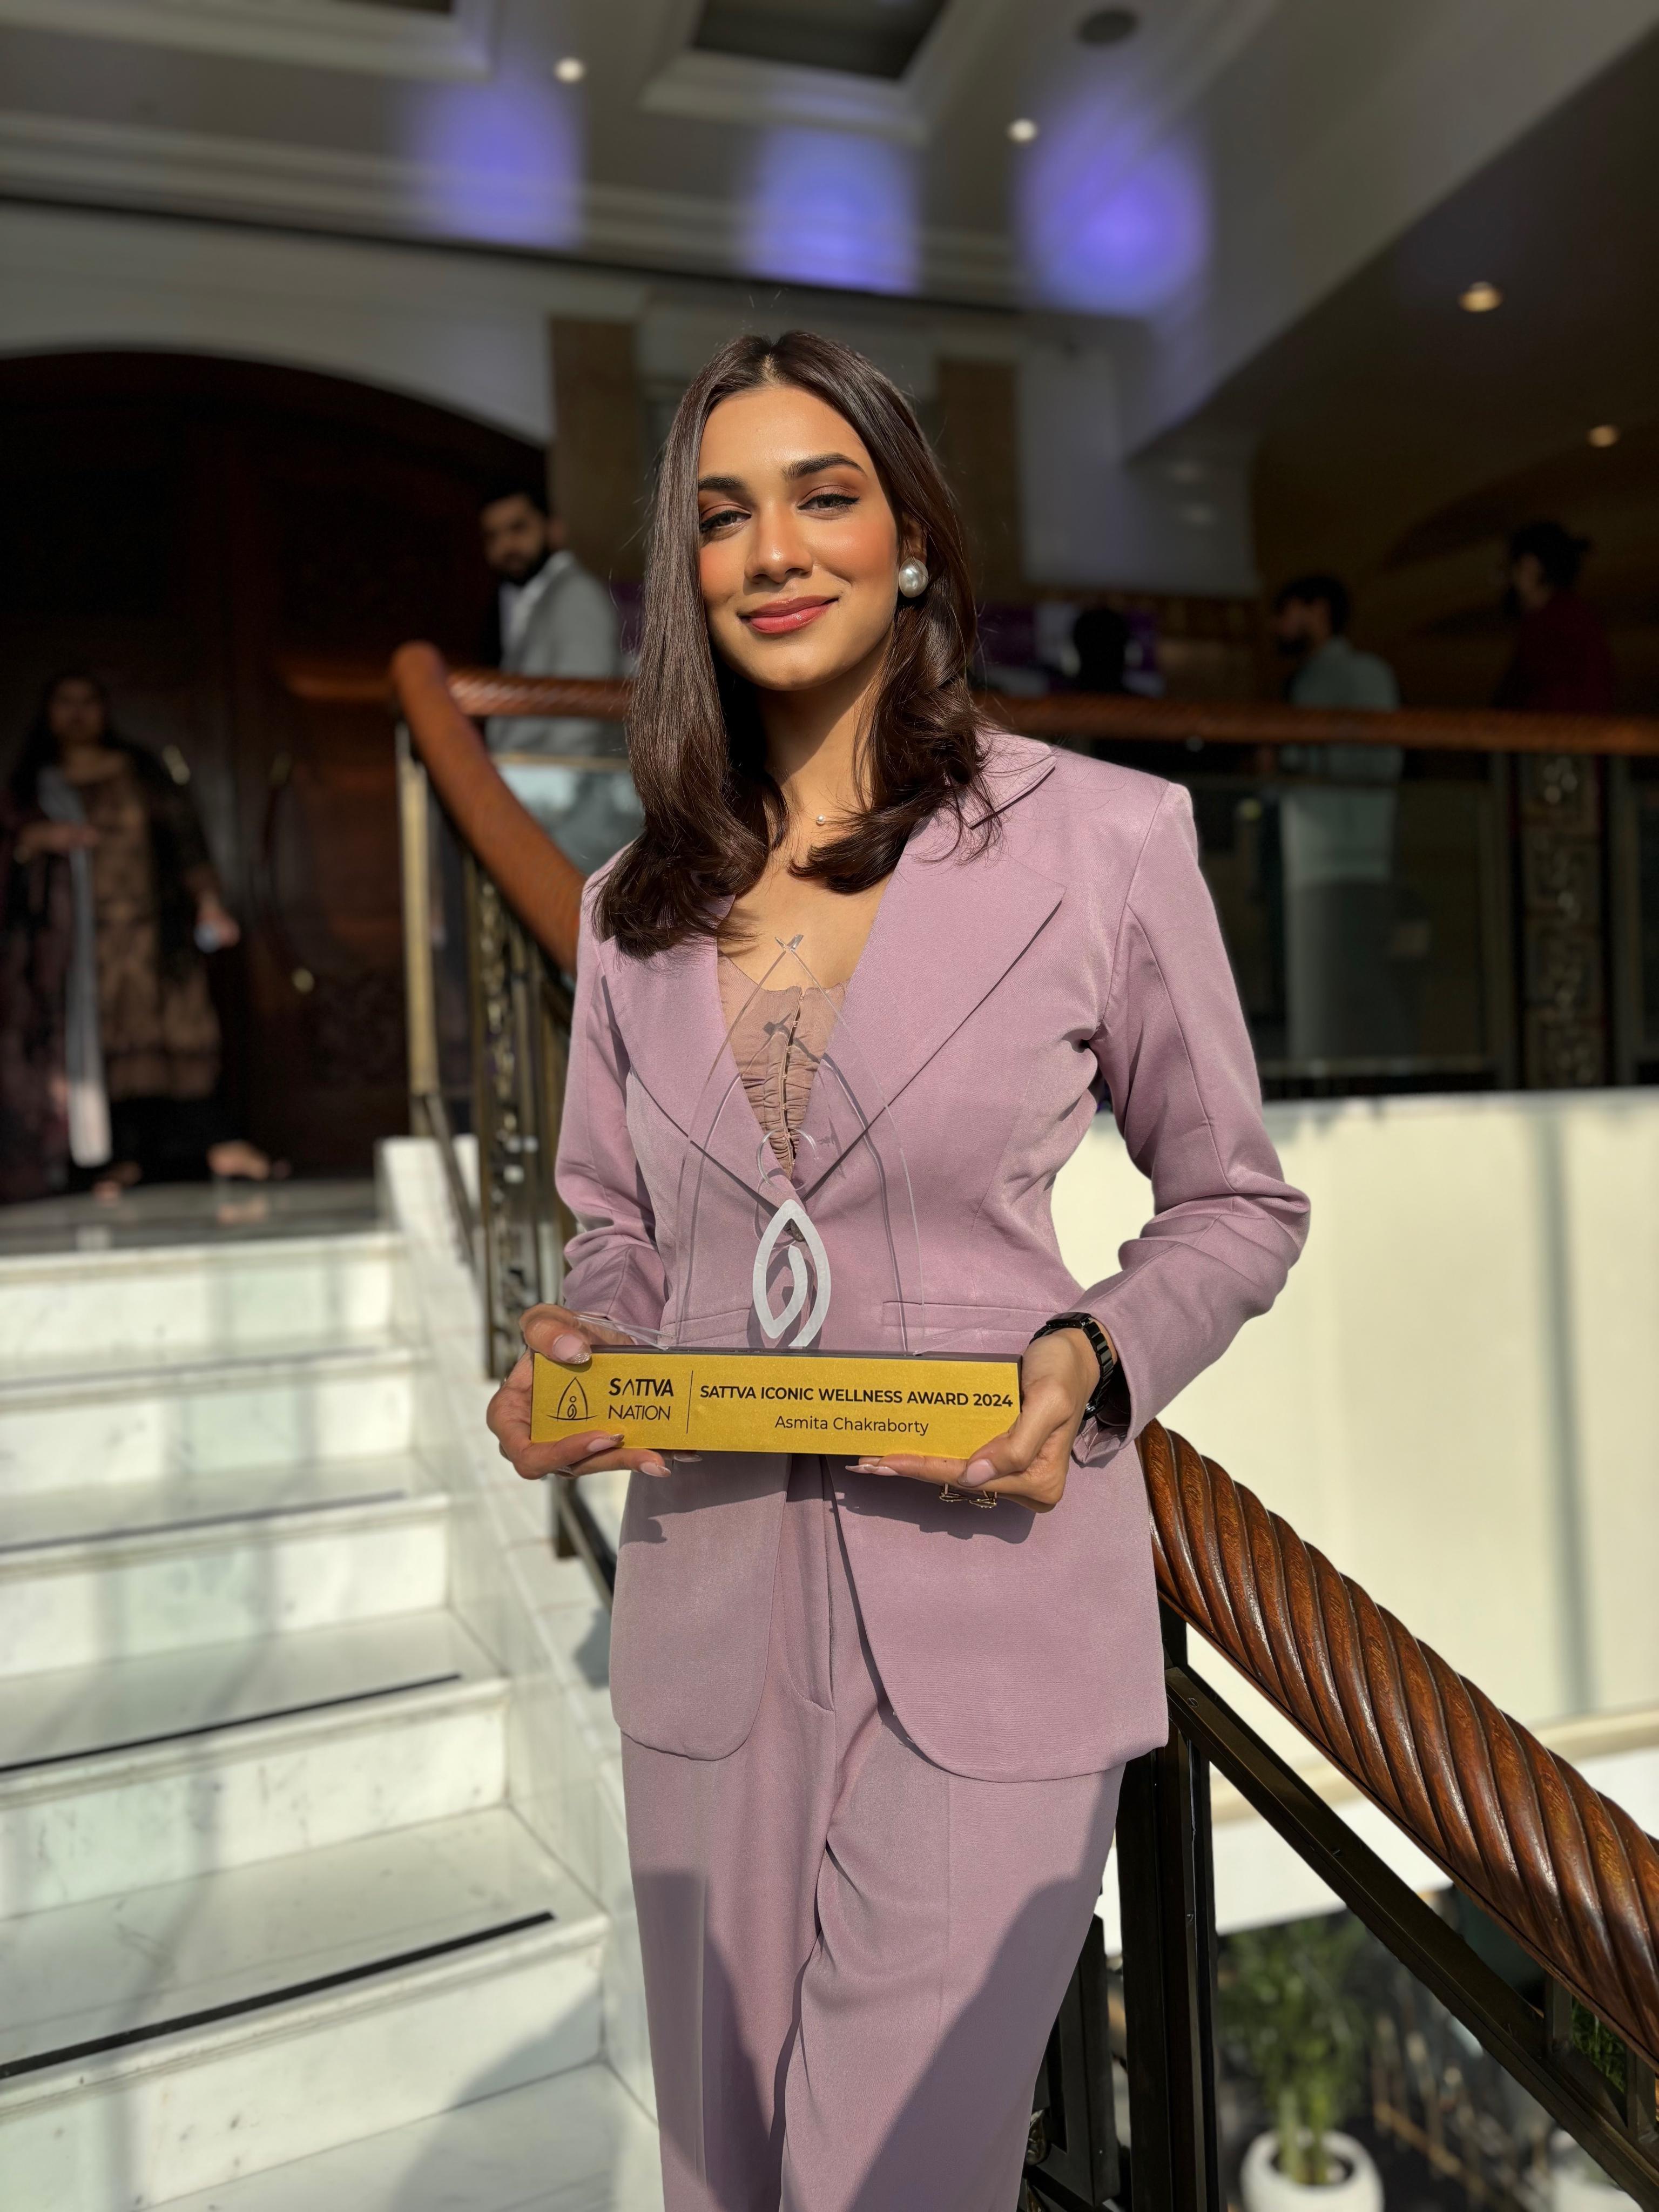 Asmita Chakraborty honored with the Sattva Iconic Wellness Award by Sattva Nation